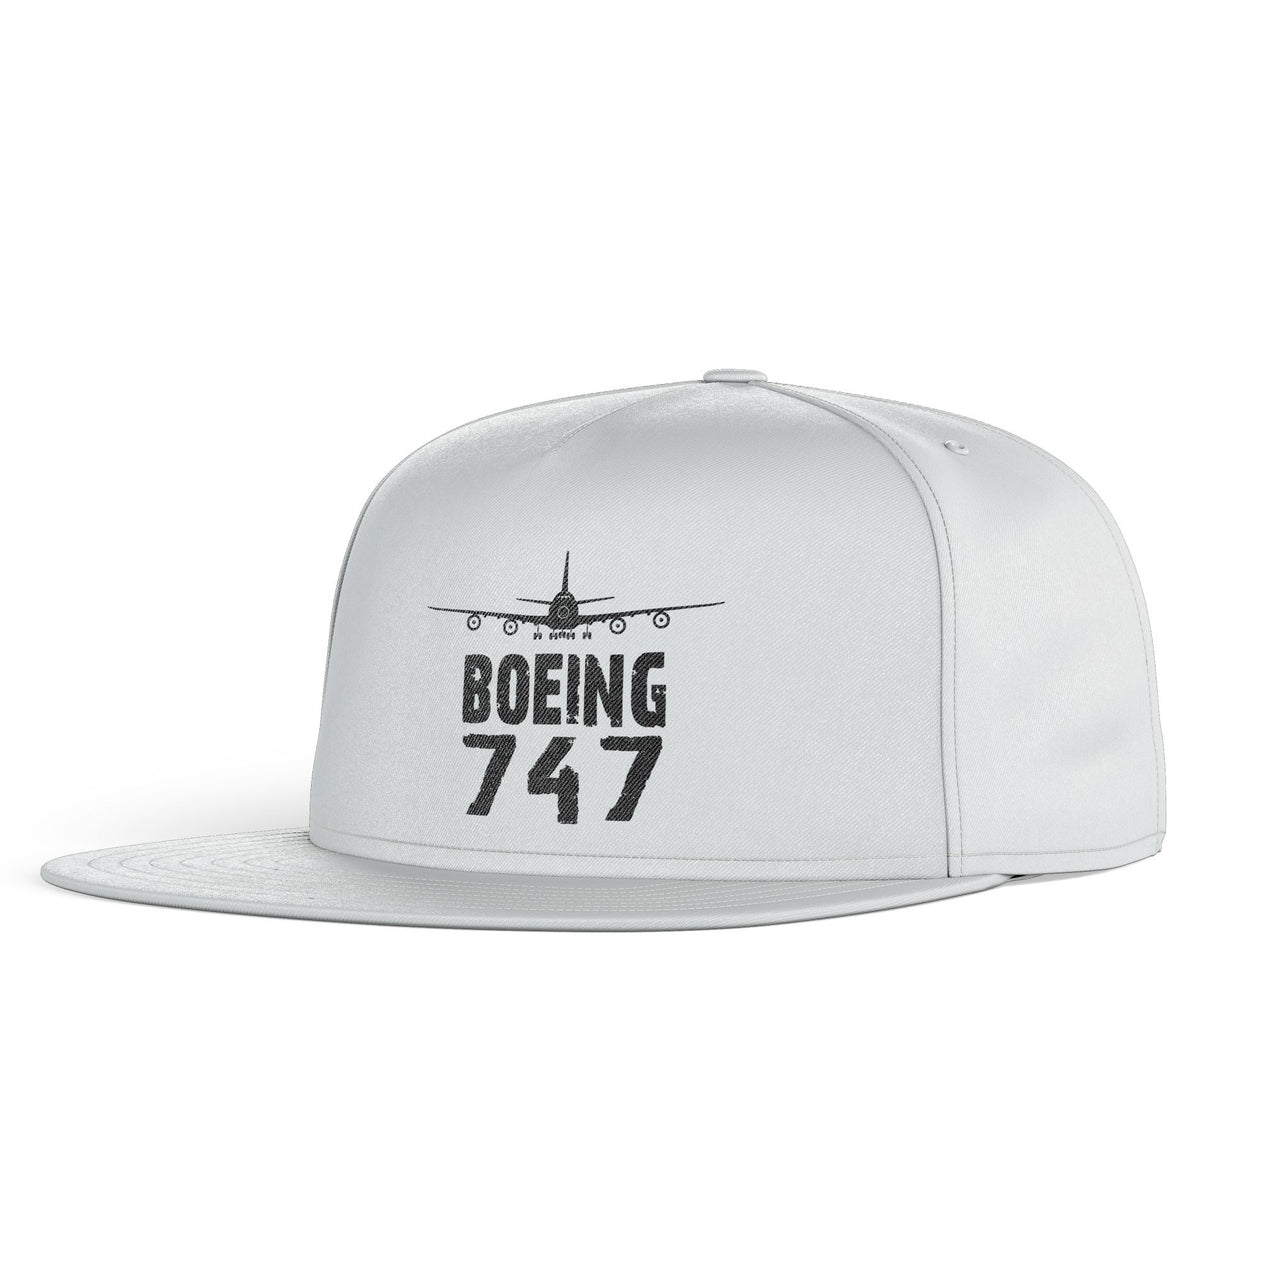 Boeing 747 & Plane Designed Snapback Caps & Hats